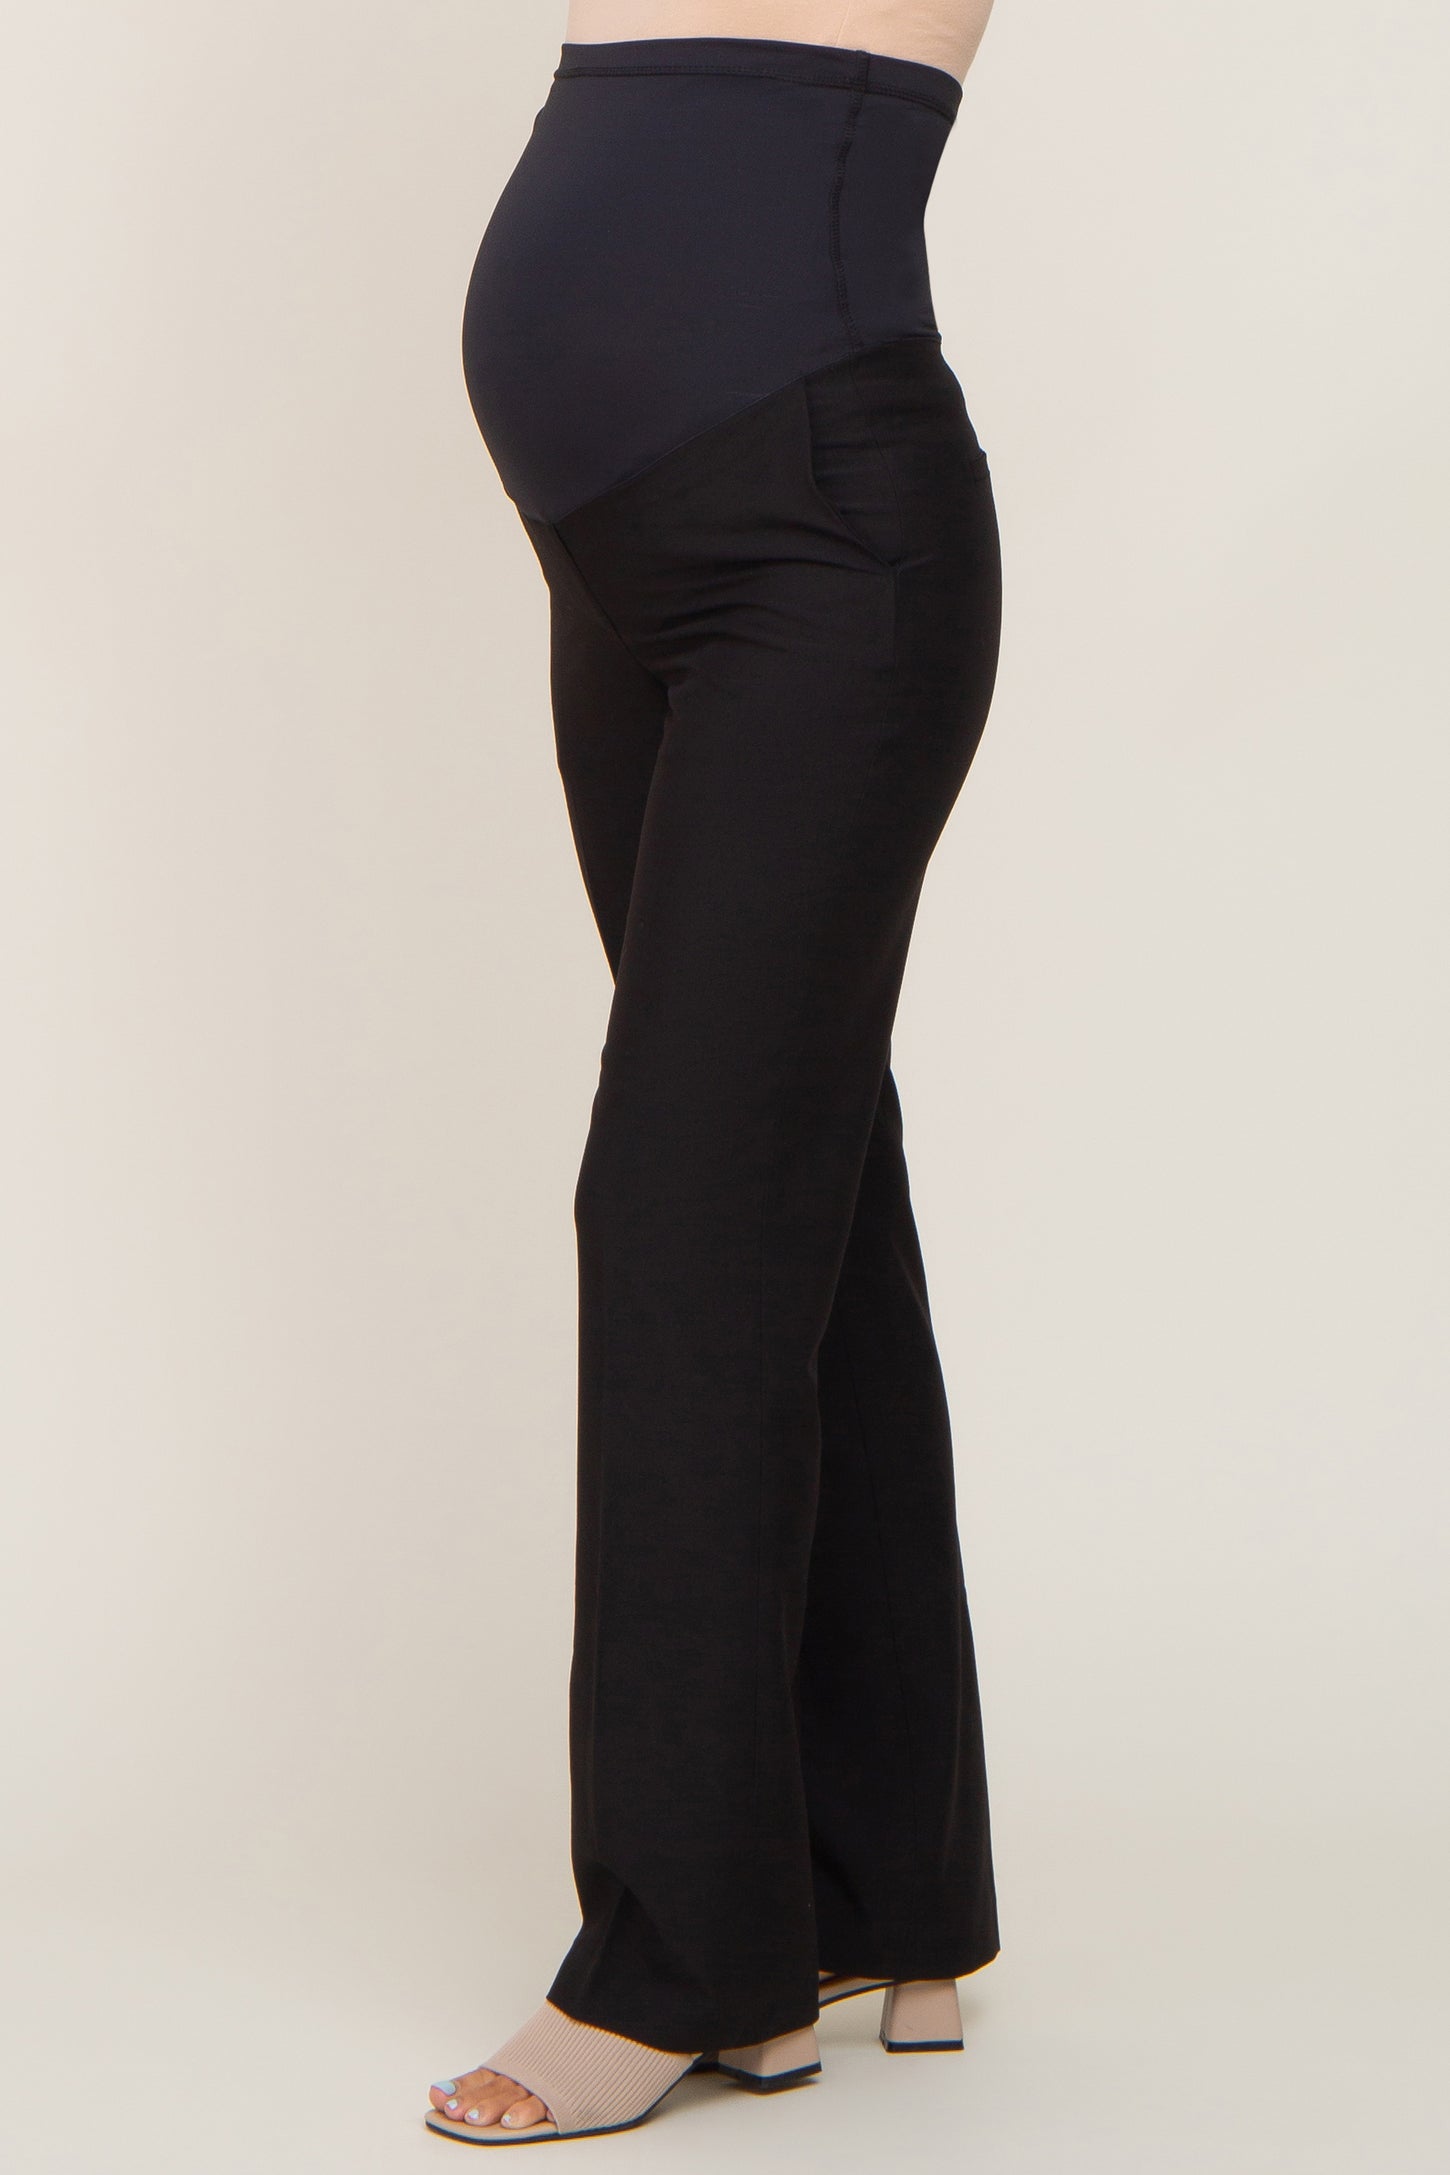 Female maternity work trousers, long, model ROSEMARI, black - Professional  clothing - N002567 - Terrateck